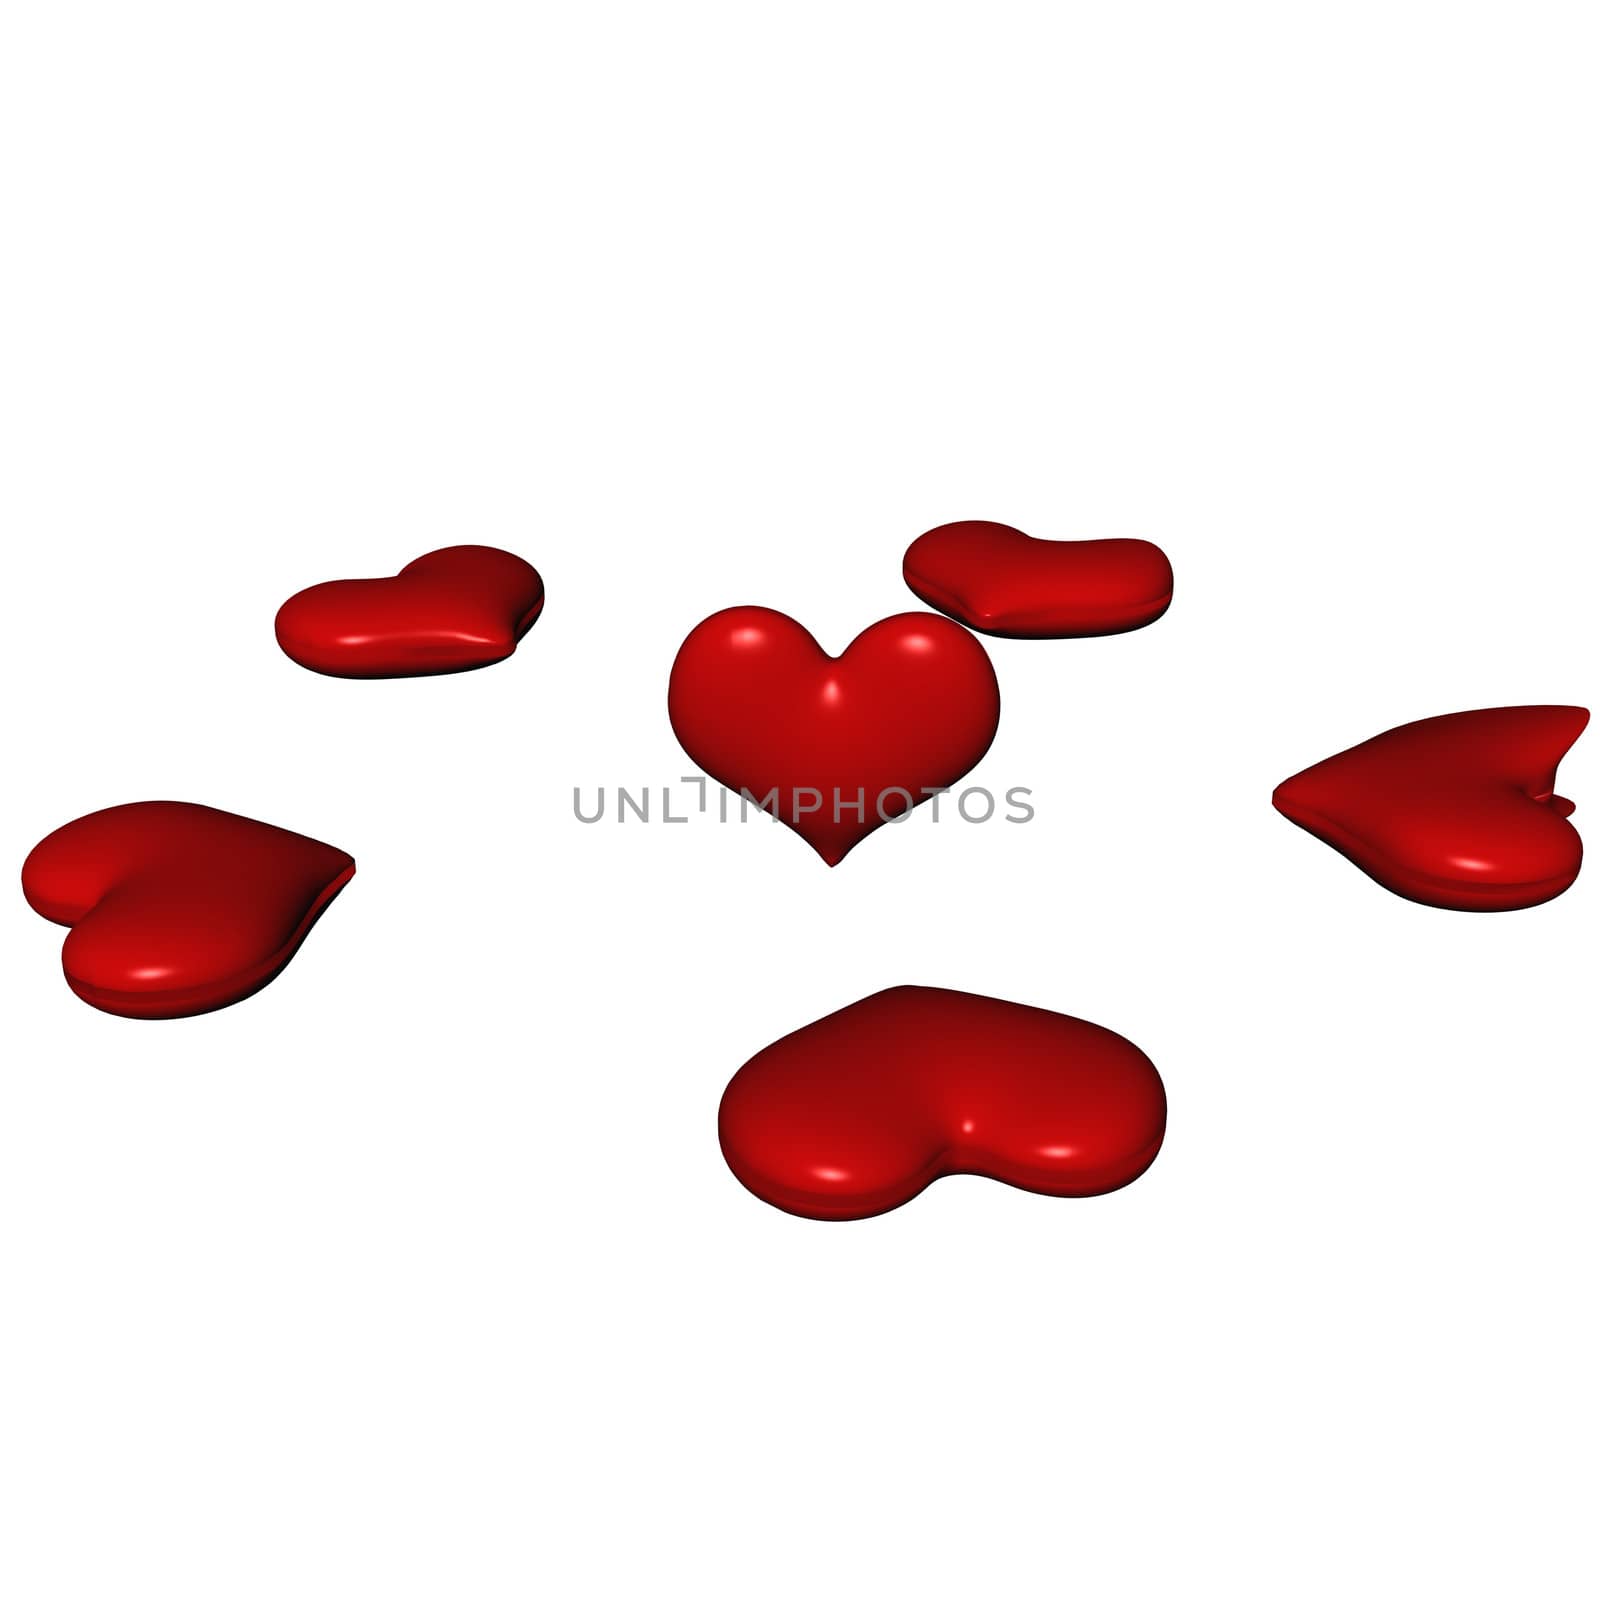 Red valentine hearts. Three dimensional render. by richter1910